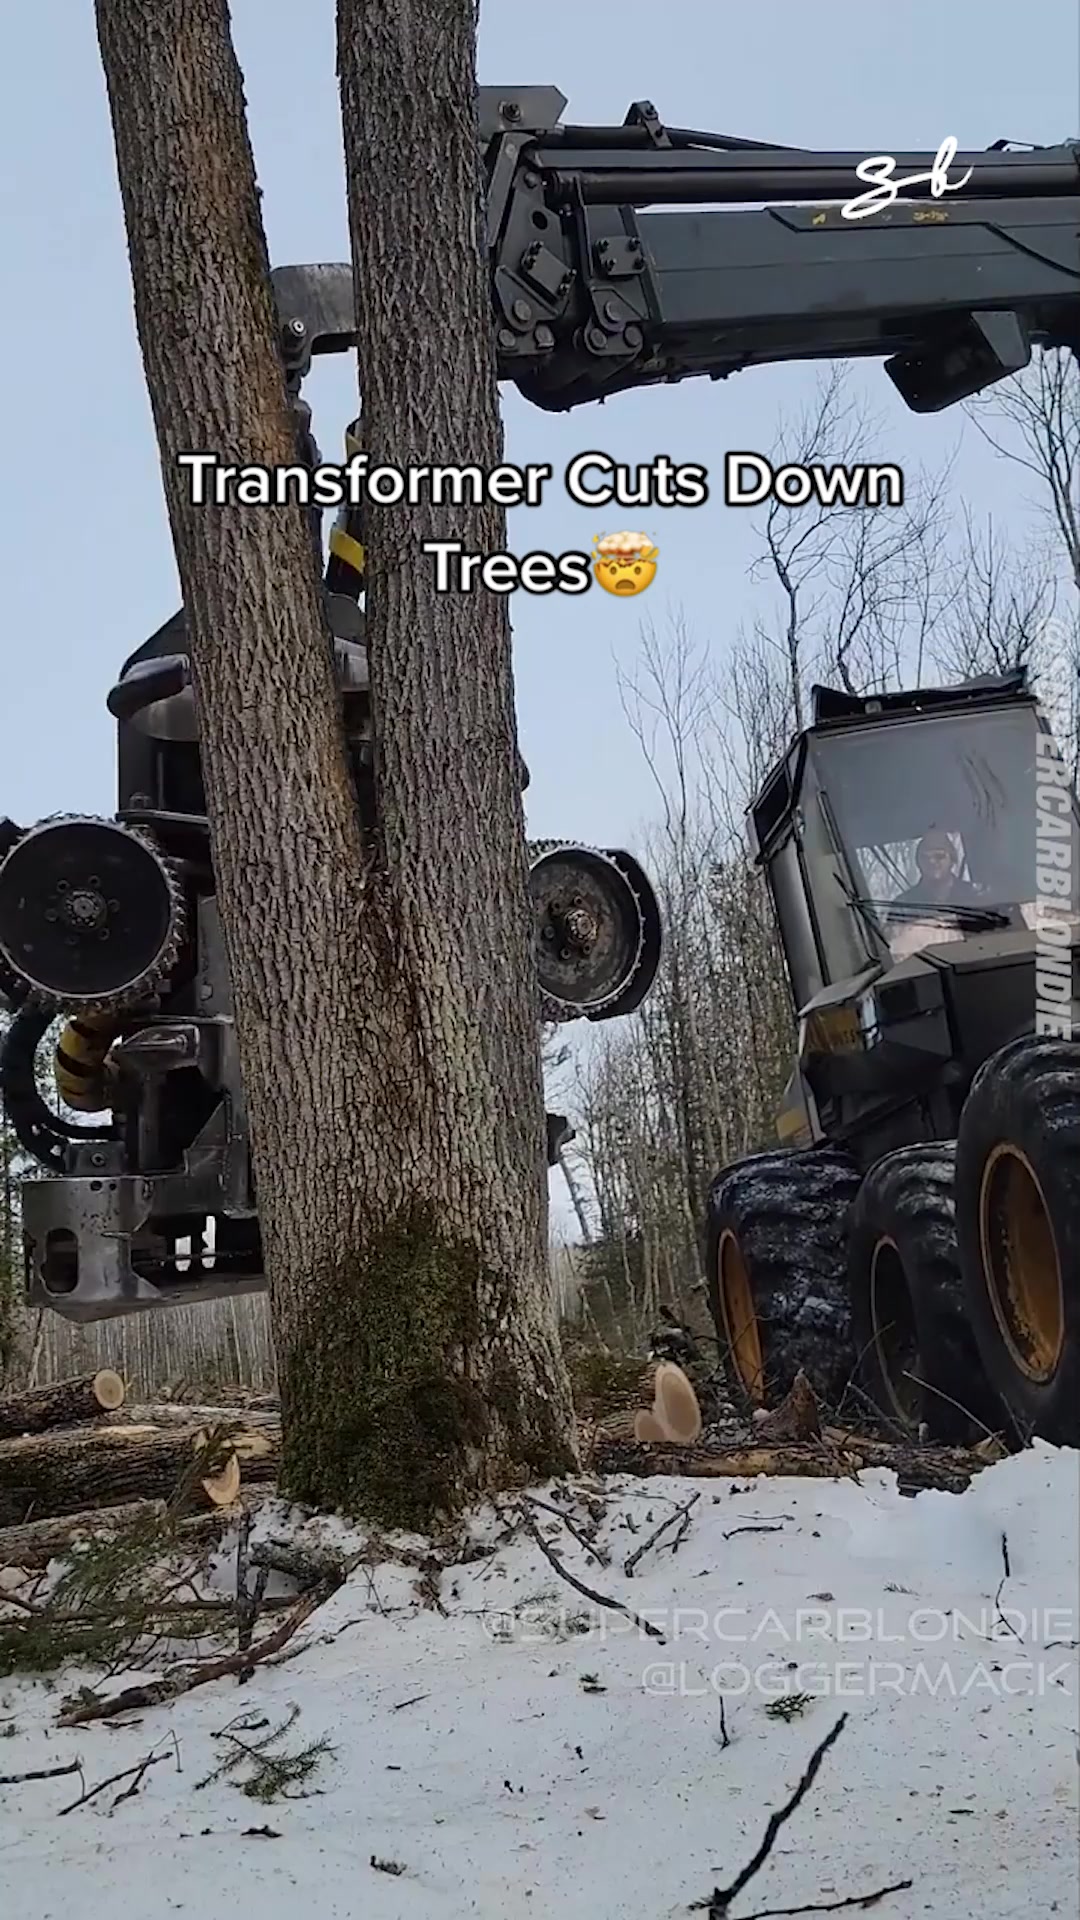 Transformer cuts down trees